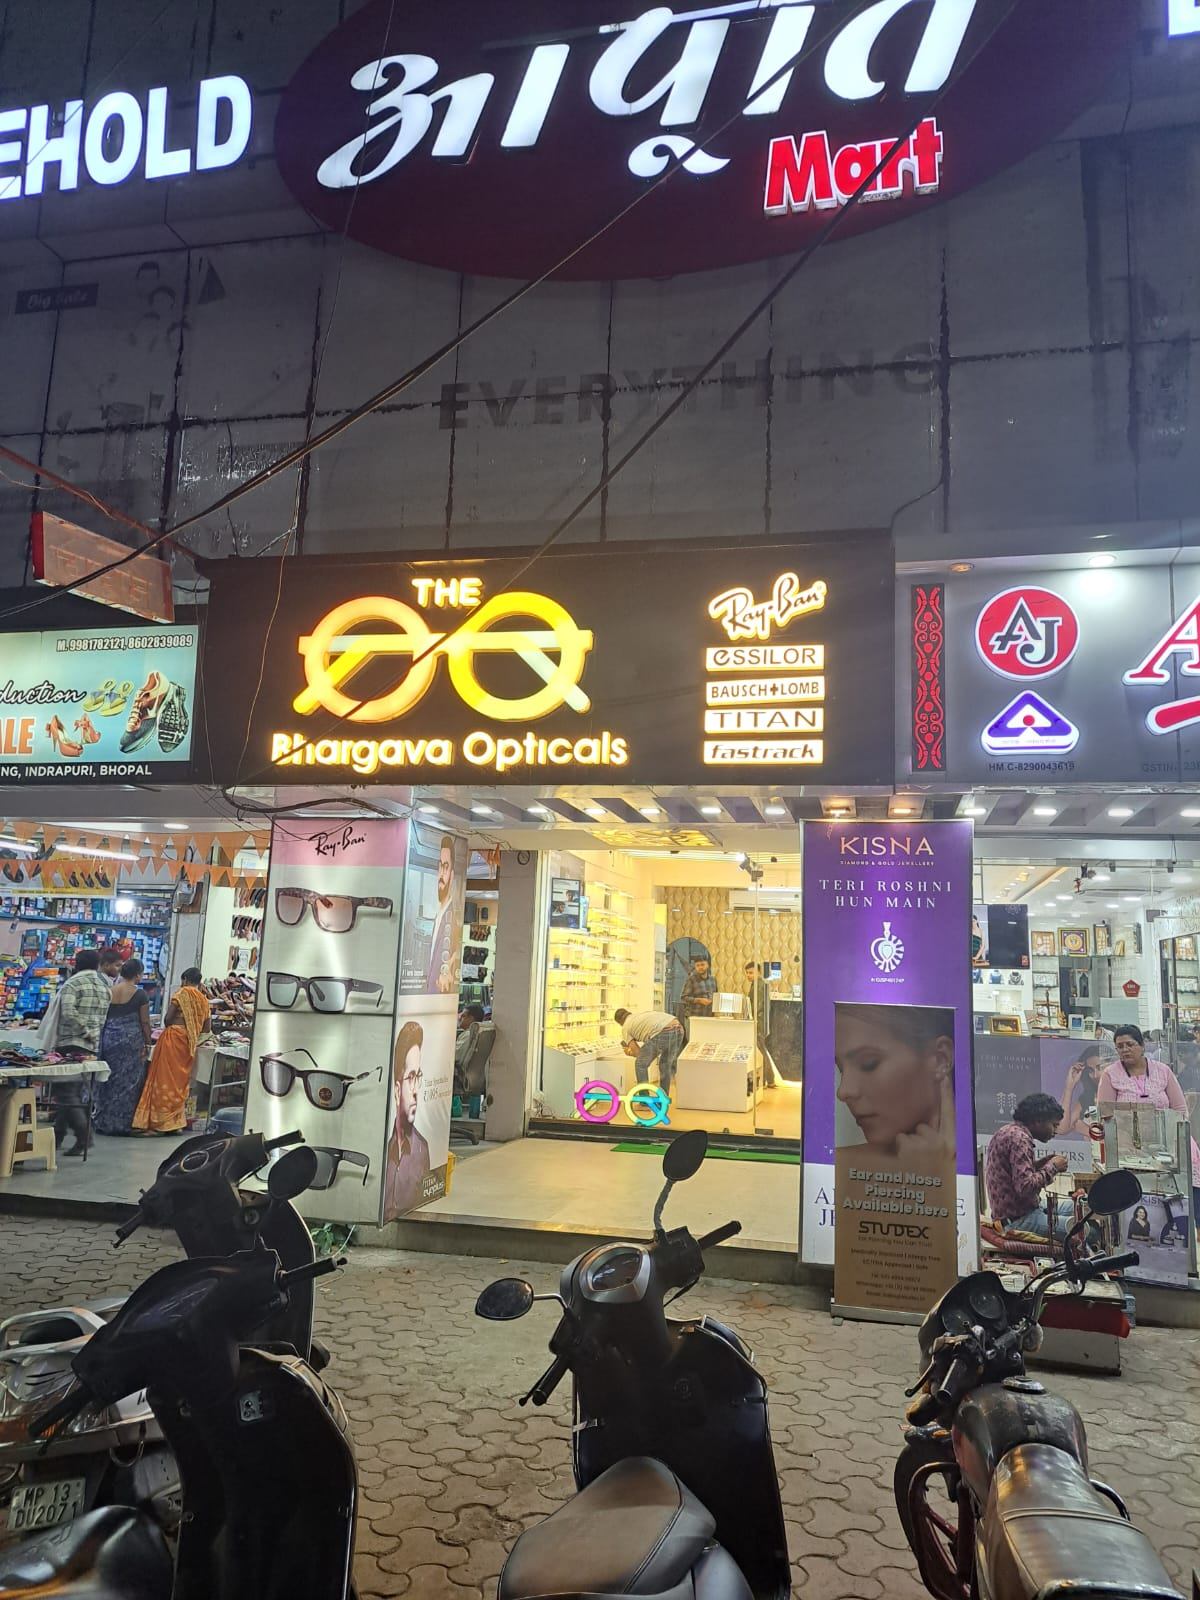 Buy 1 Get 1 Deal @Bhargav Optical , Bhopal